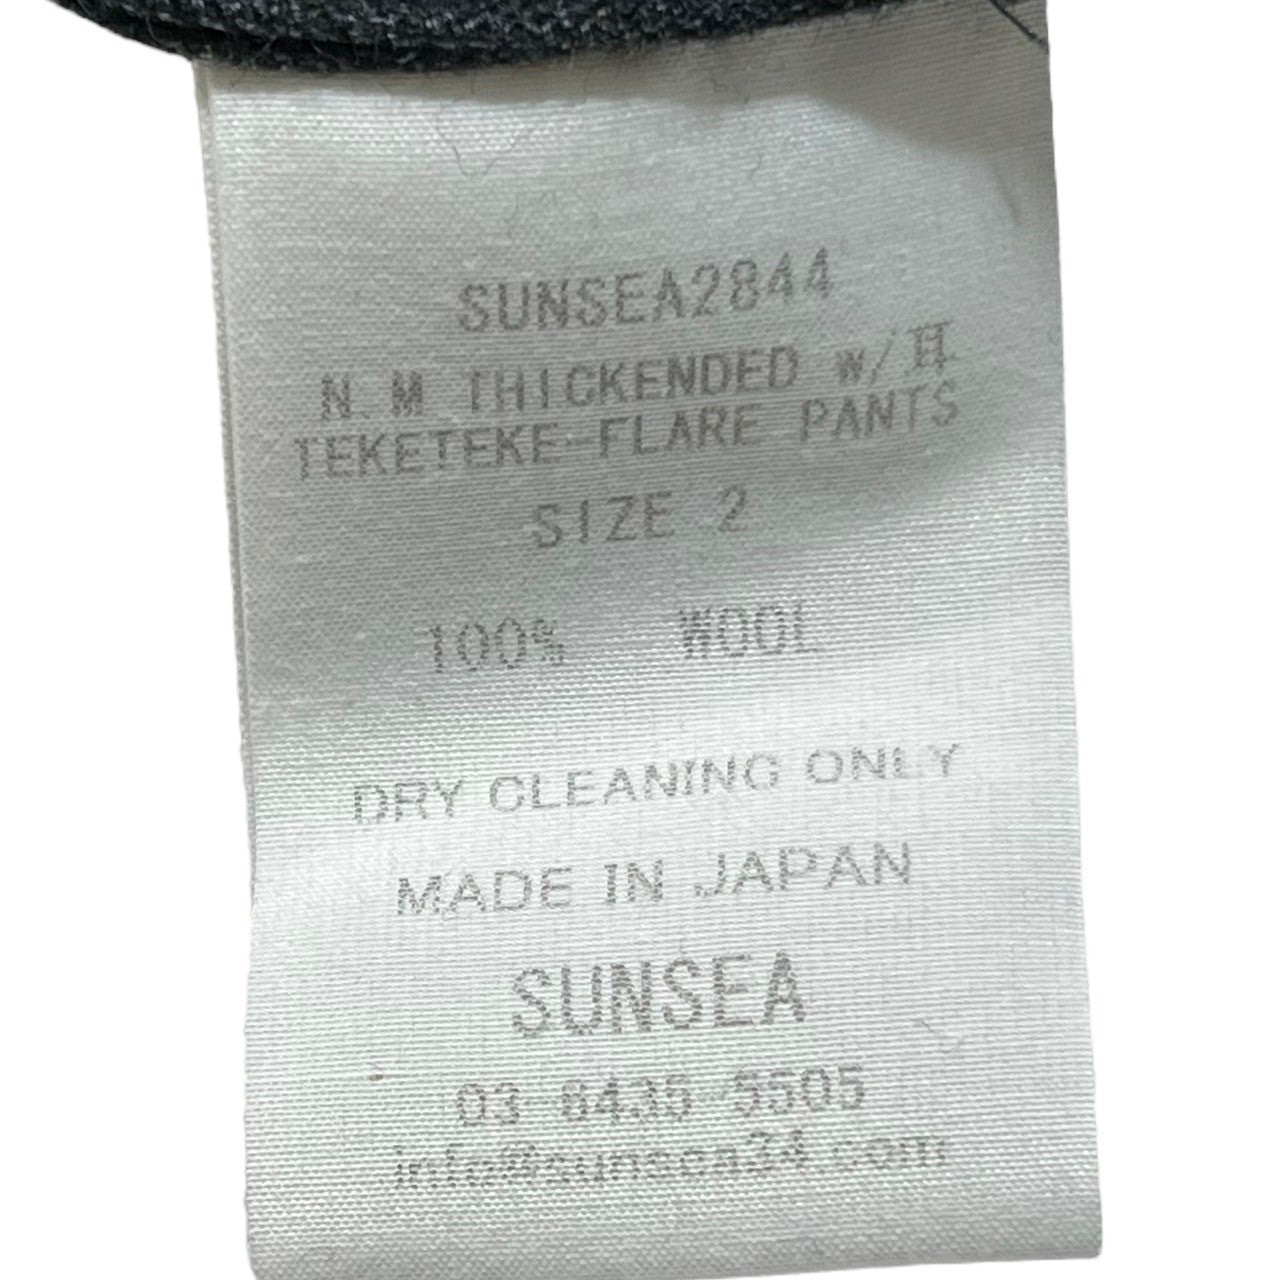 SUNSEA(サンシー) 28th N.M THICKENDED w/耳 FLARE PANTS フレアパンツ 23AW-24SS SUNSEA2844 SIZE 2(M) old gray(オールドグレー) 参考定価55,000円(税込) 完売商品